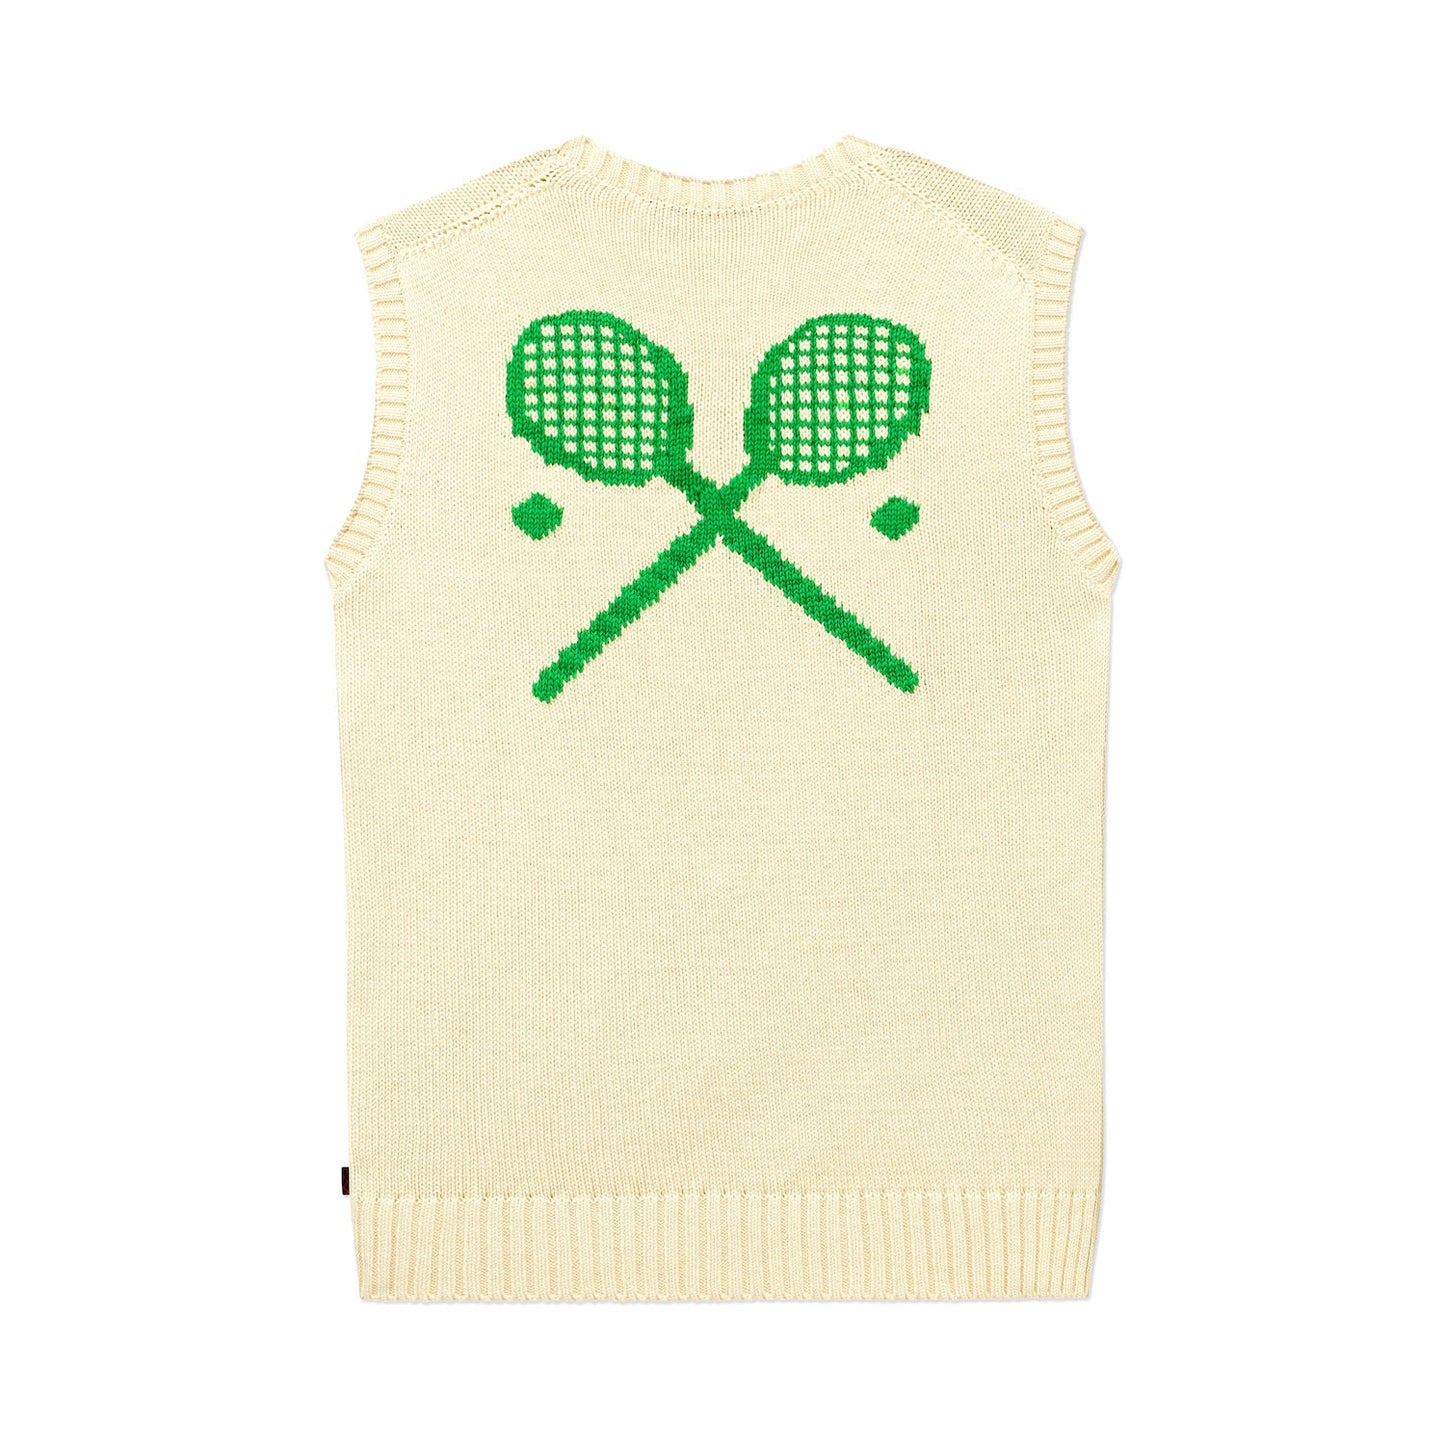 Women's Racquets Sweater Vest